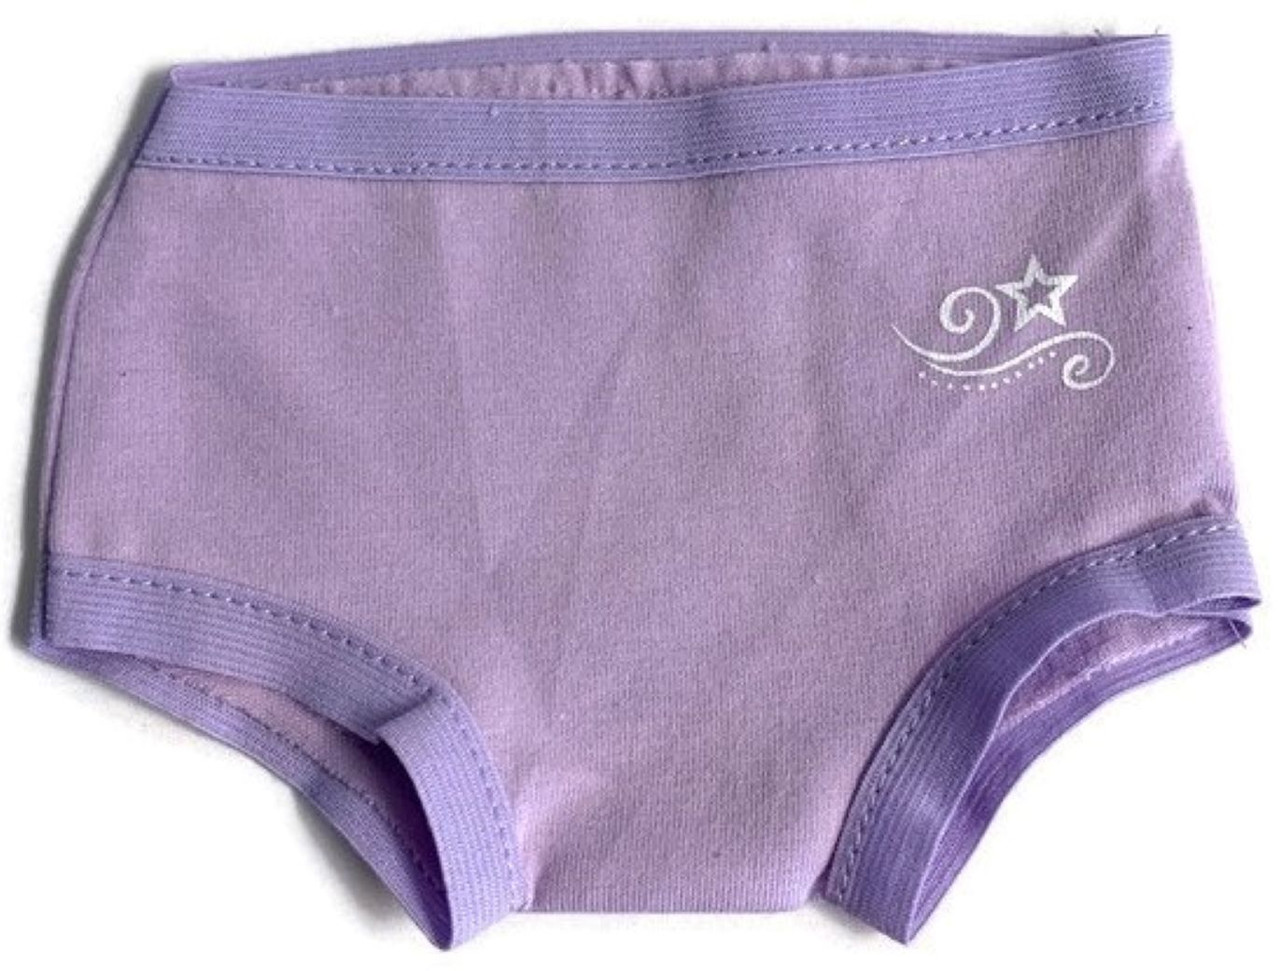 Lavender, White & Pink 3pk Panties for 18 American Girl Doll